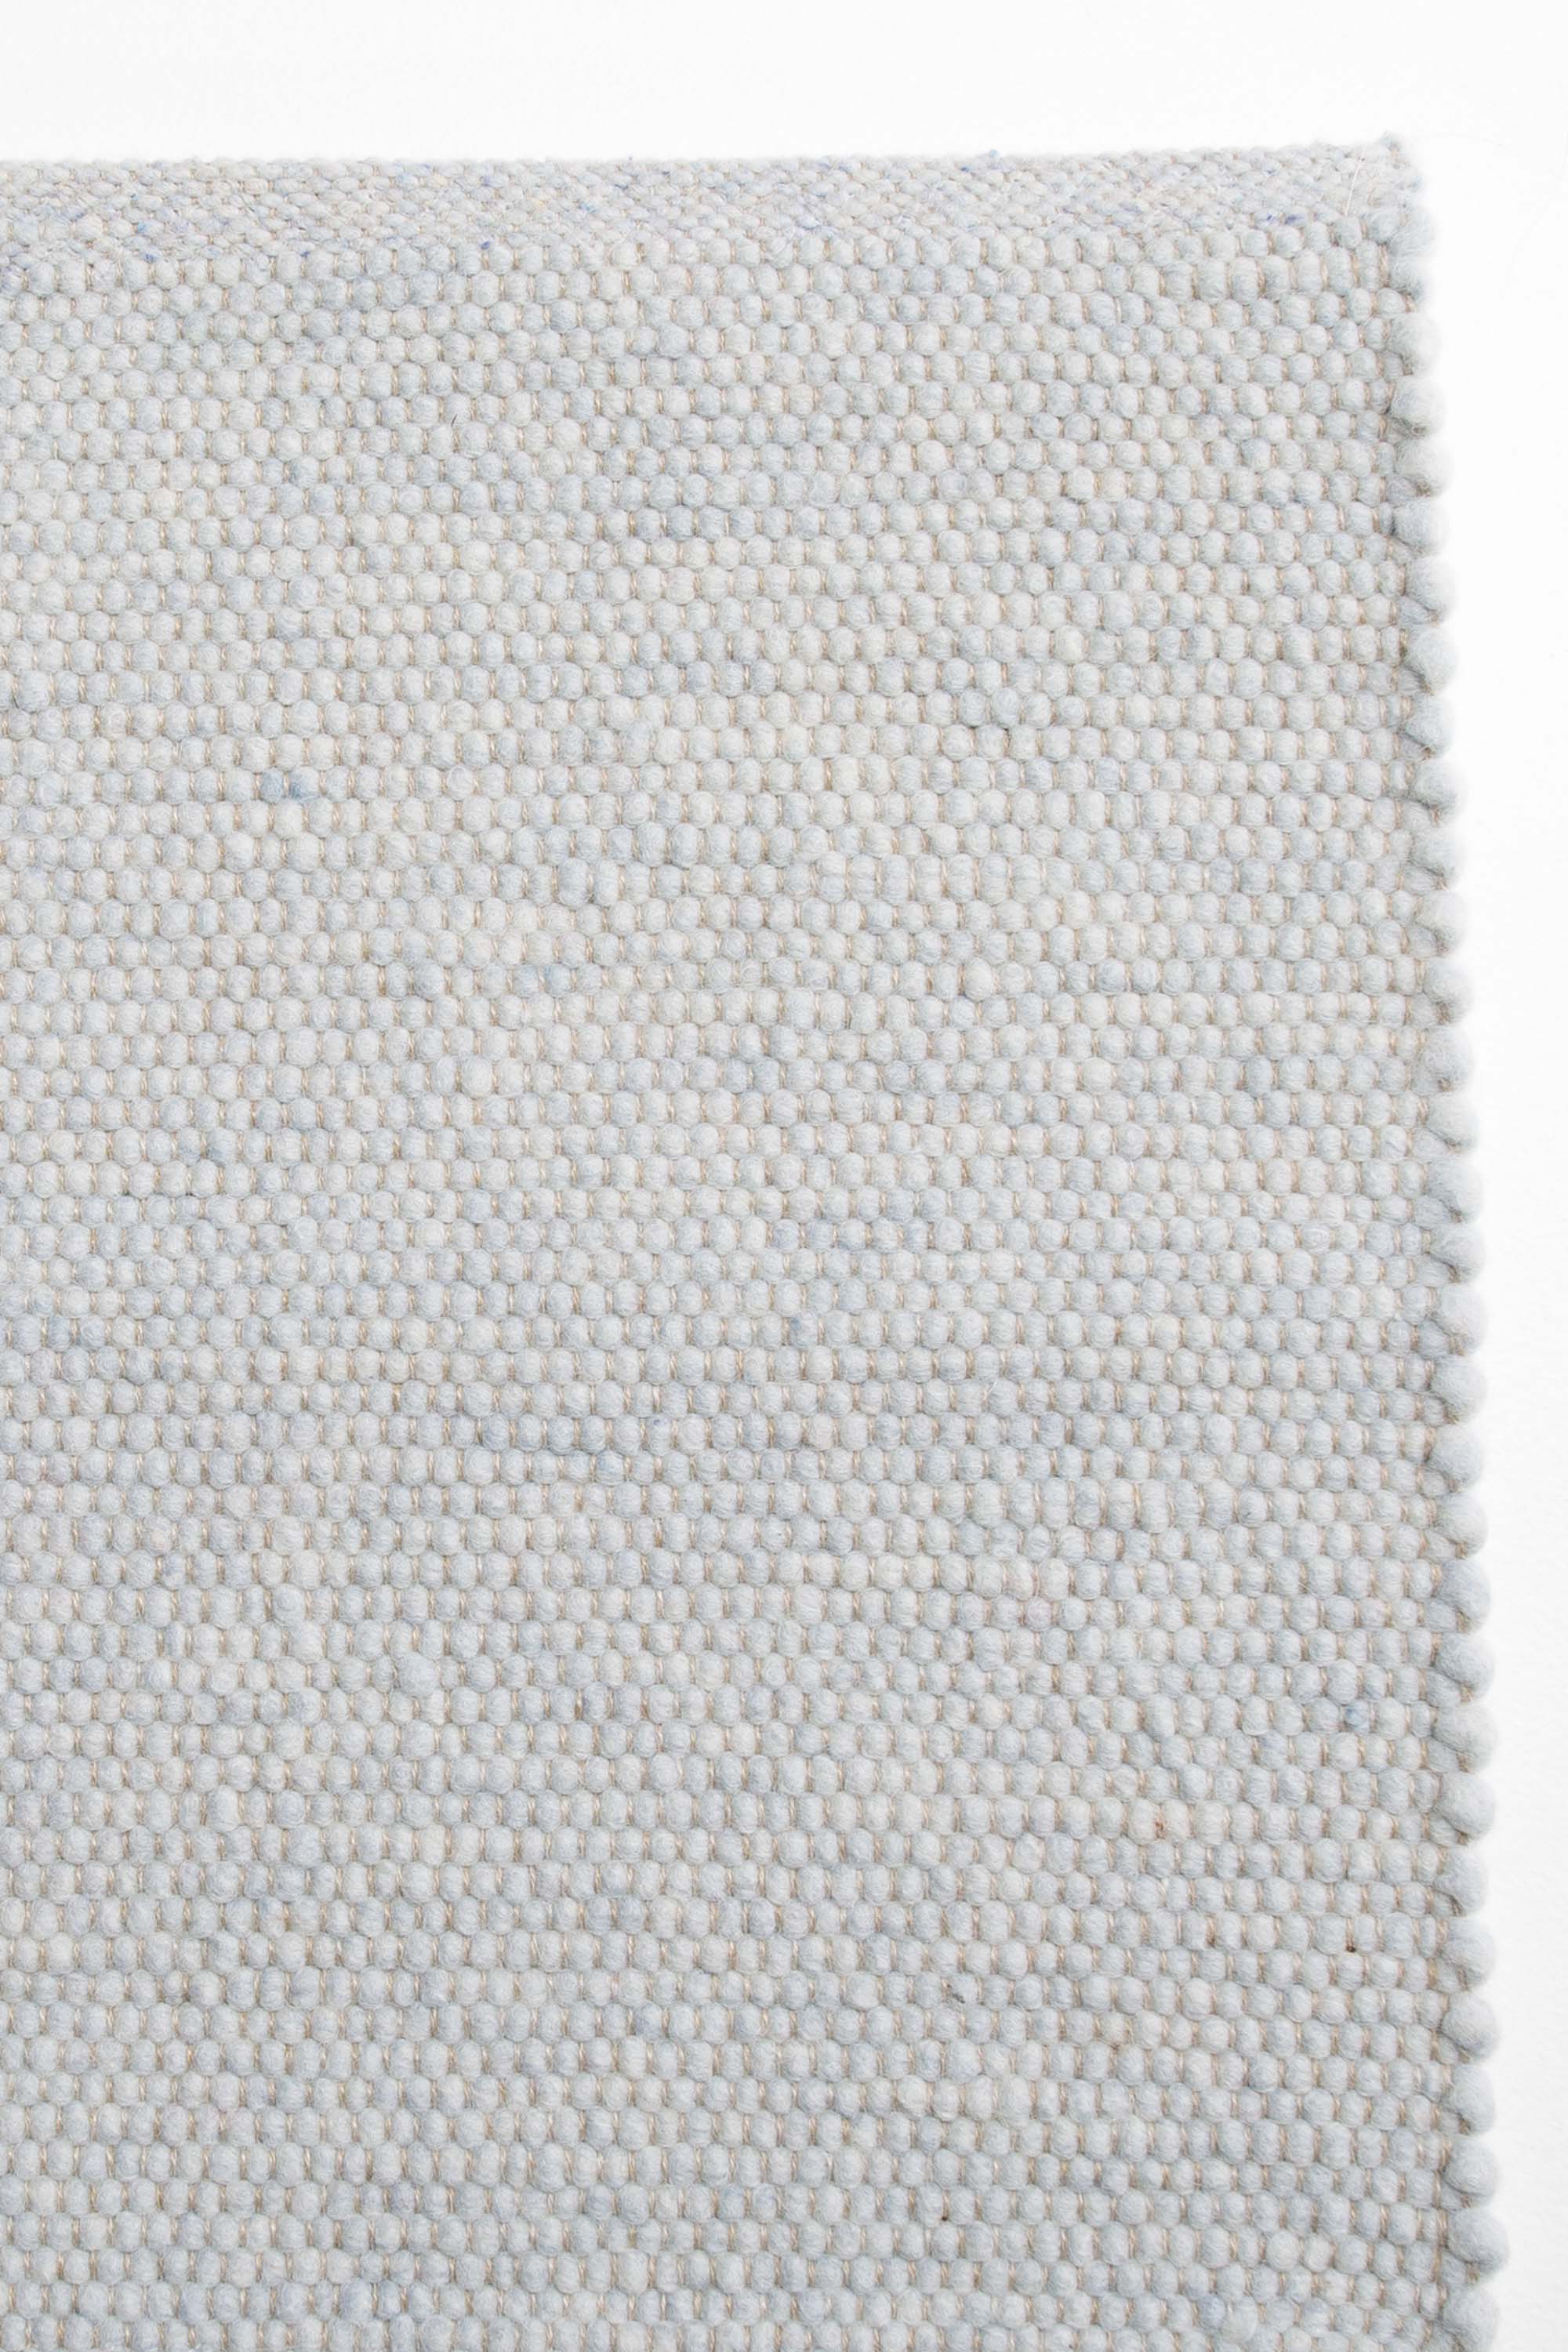 White luxury plain handwoven rug